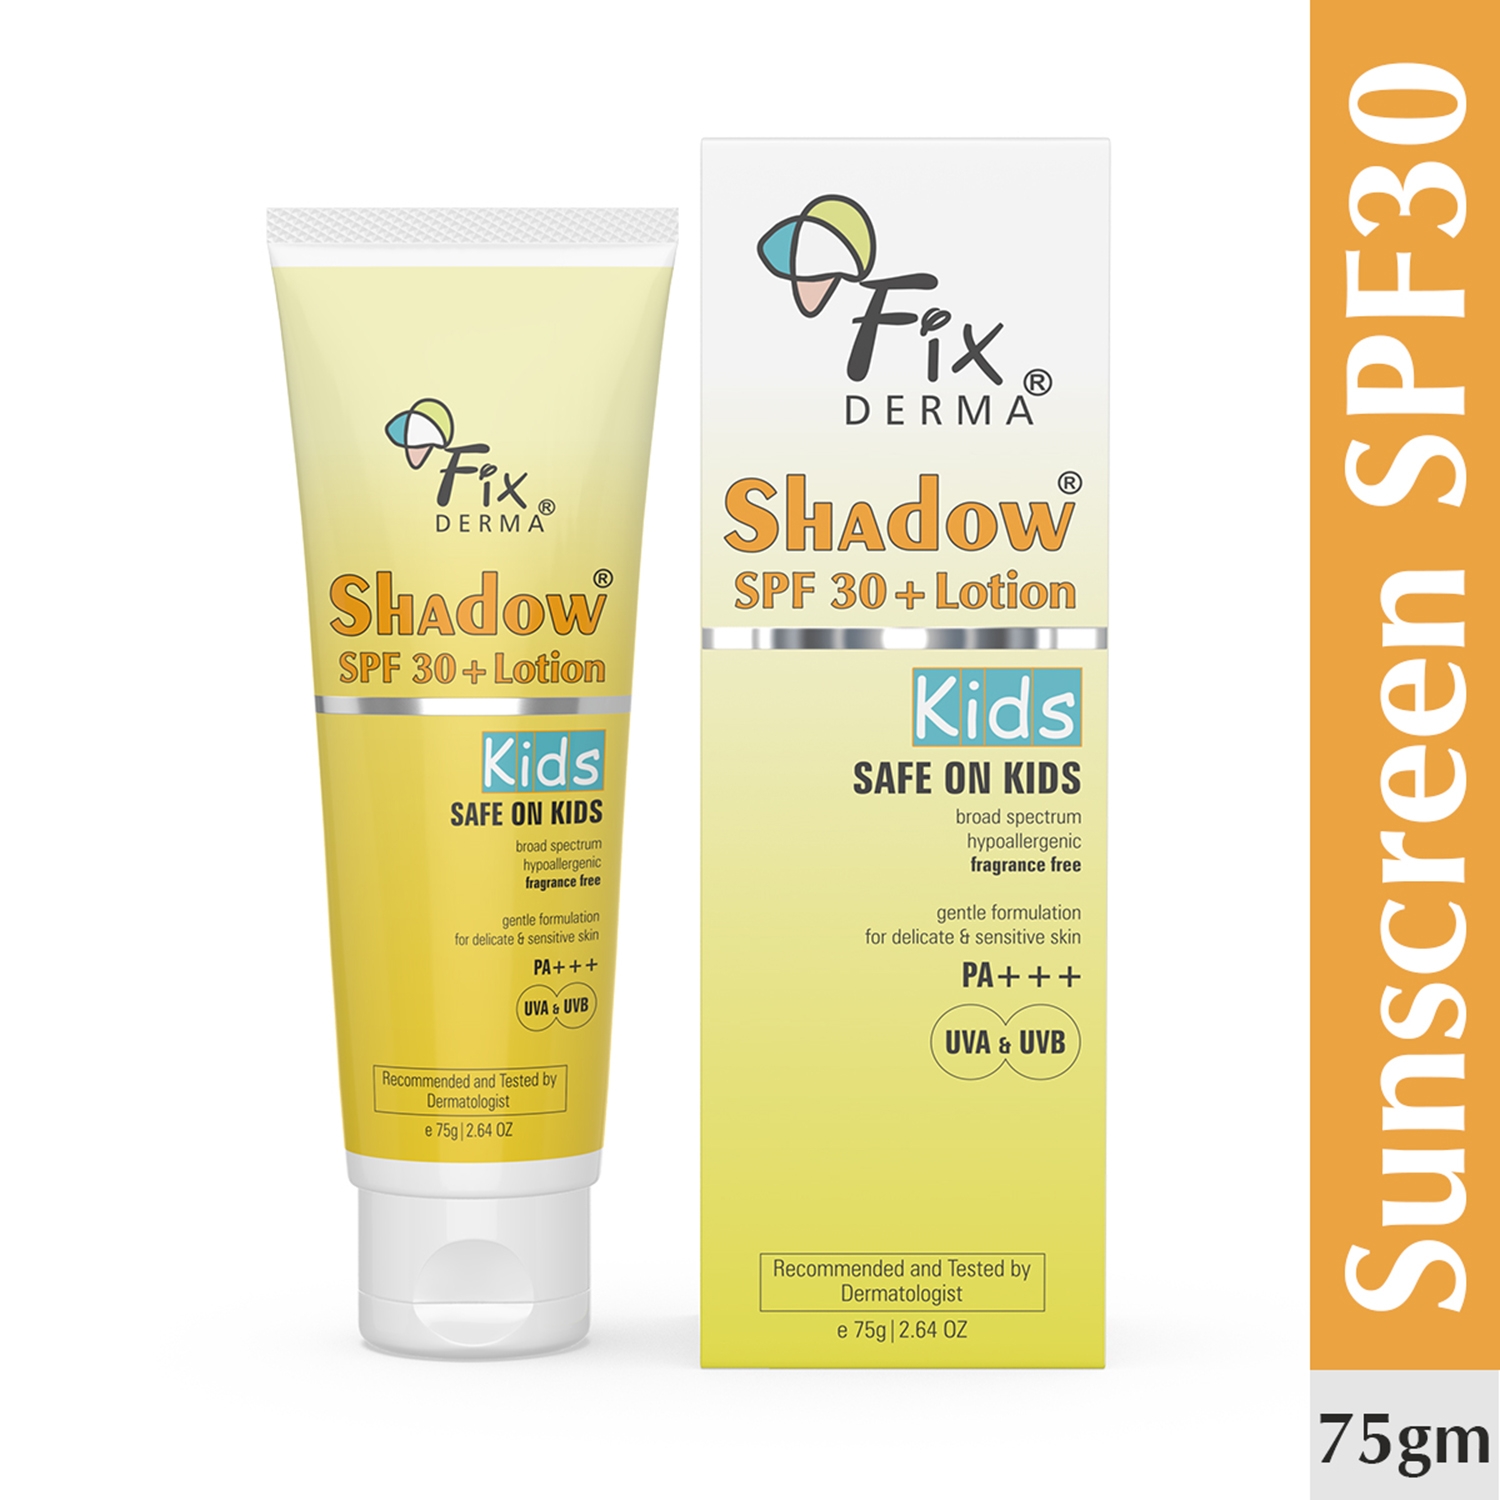 Fixderma | Fixderma Shadow SPF 30 Lotion for Kids (75g)